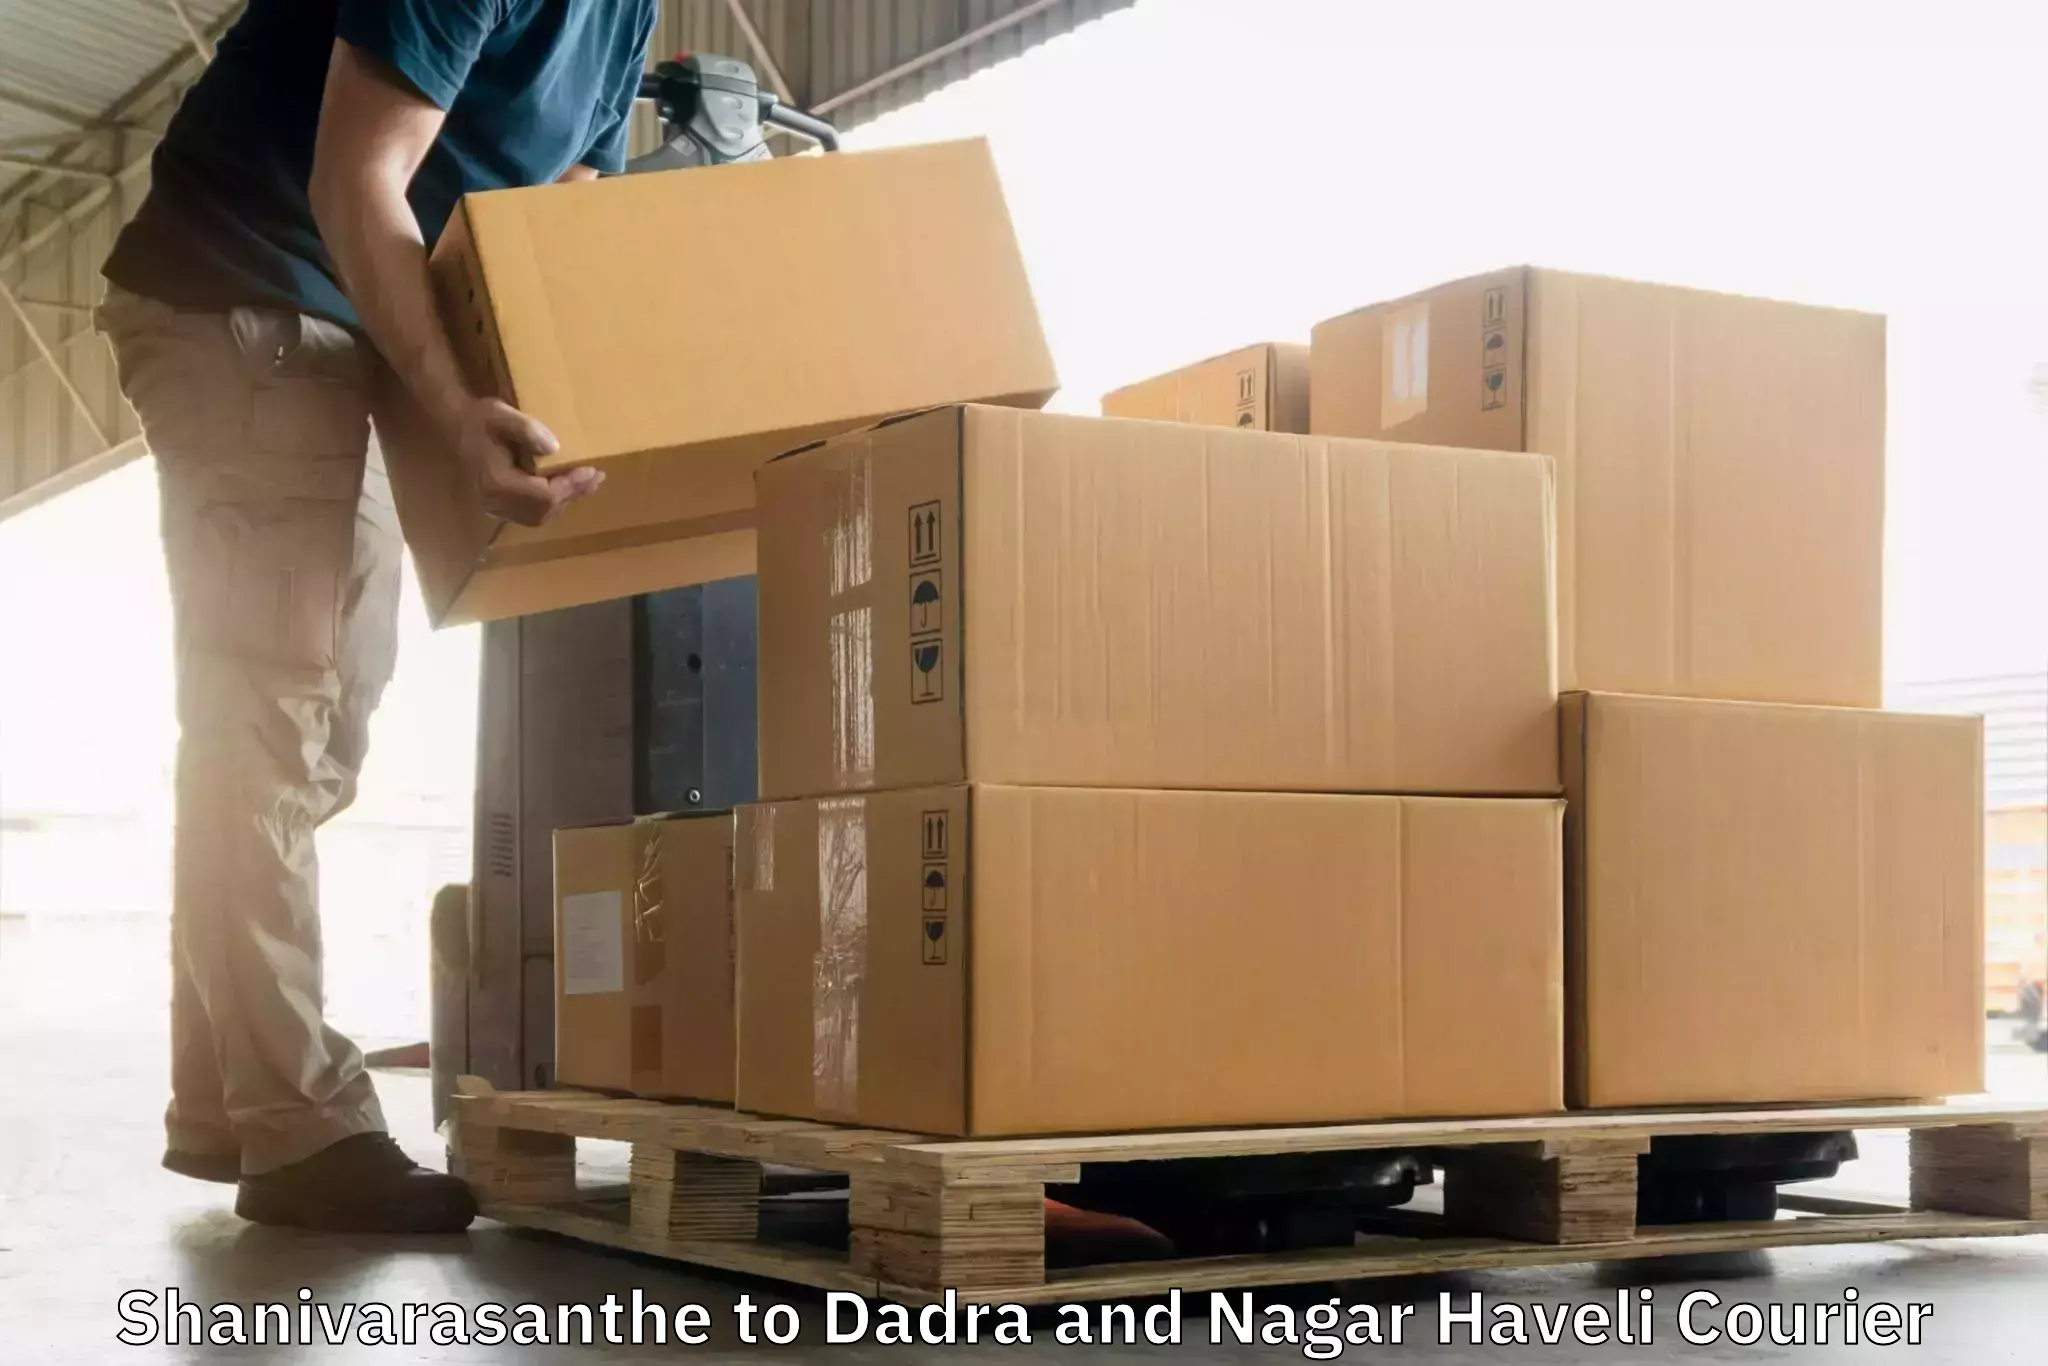 International courier networks Shanivarasanthe to Dadra and Nagar Haveli